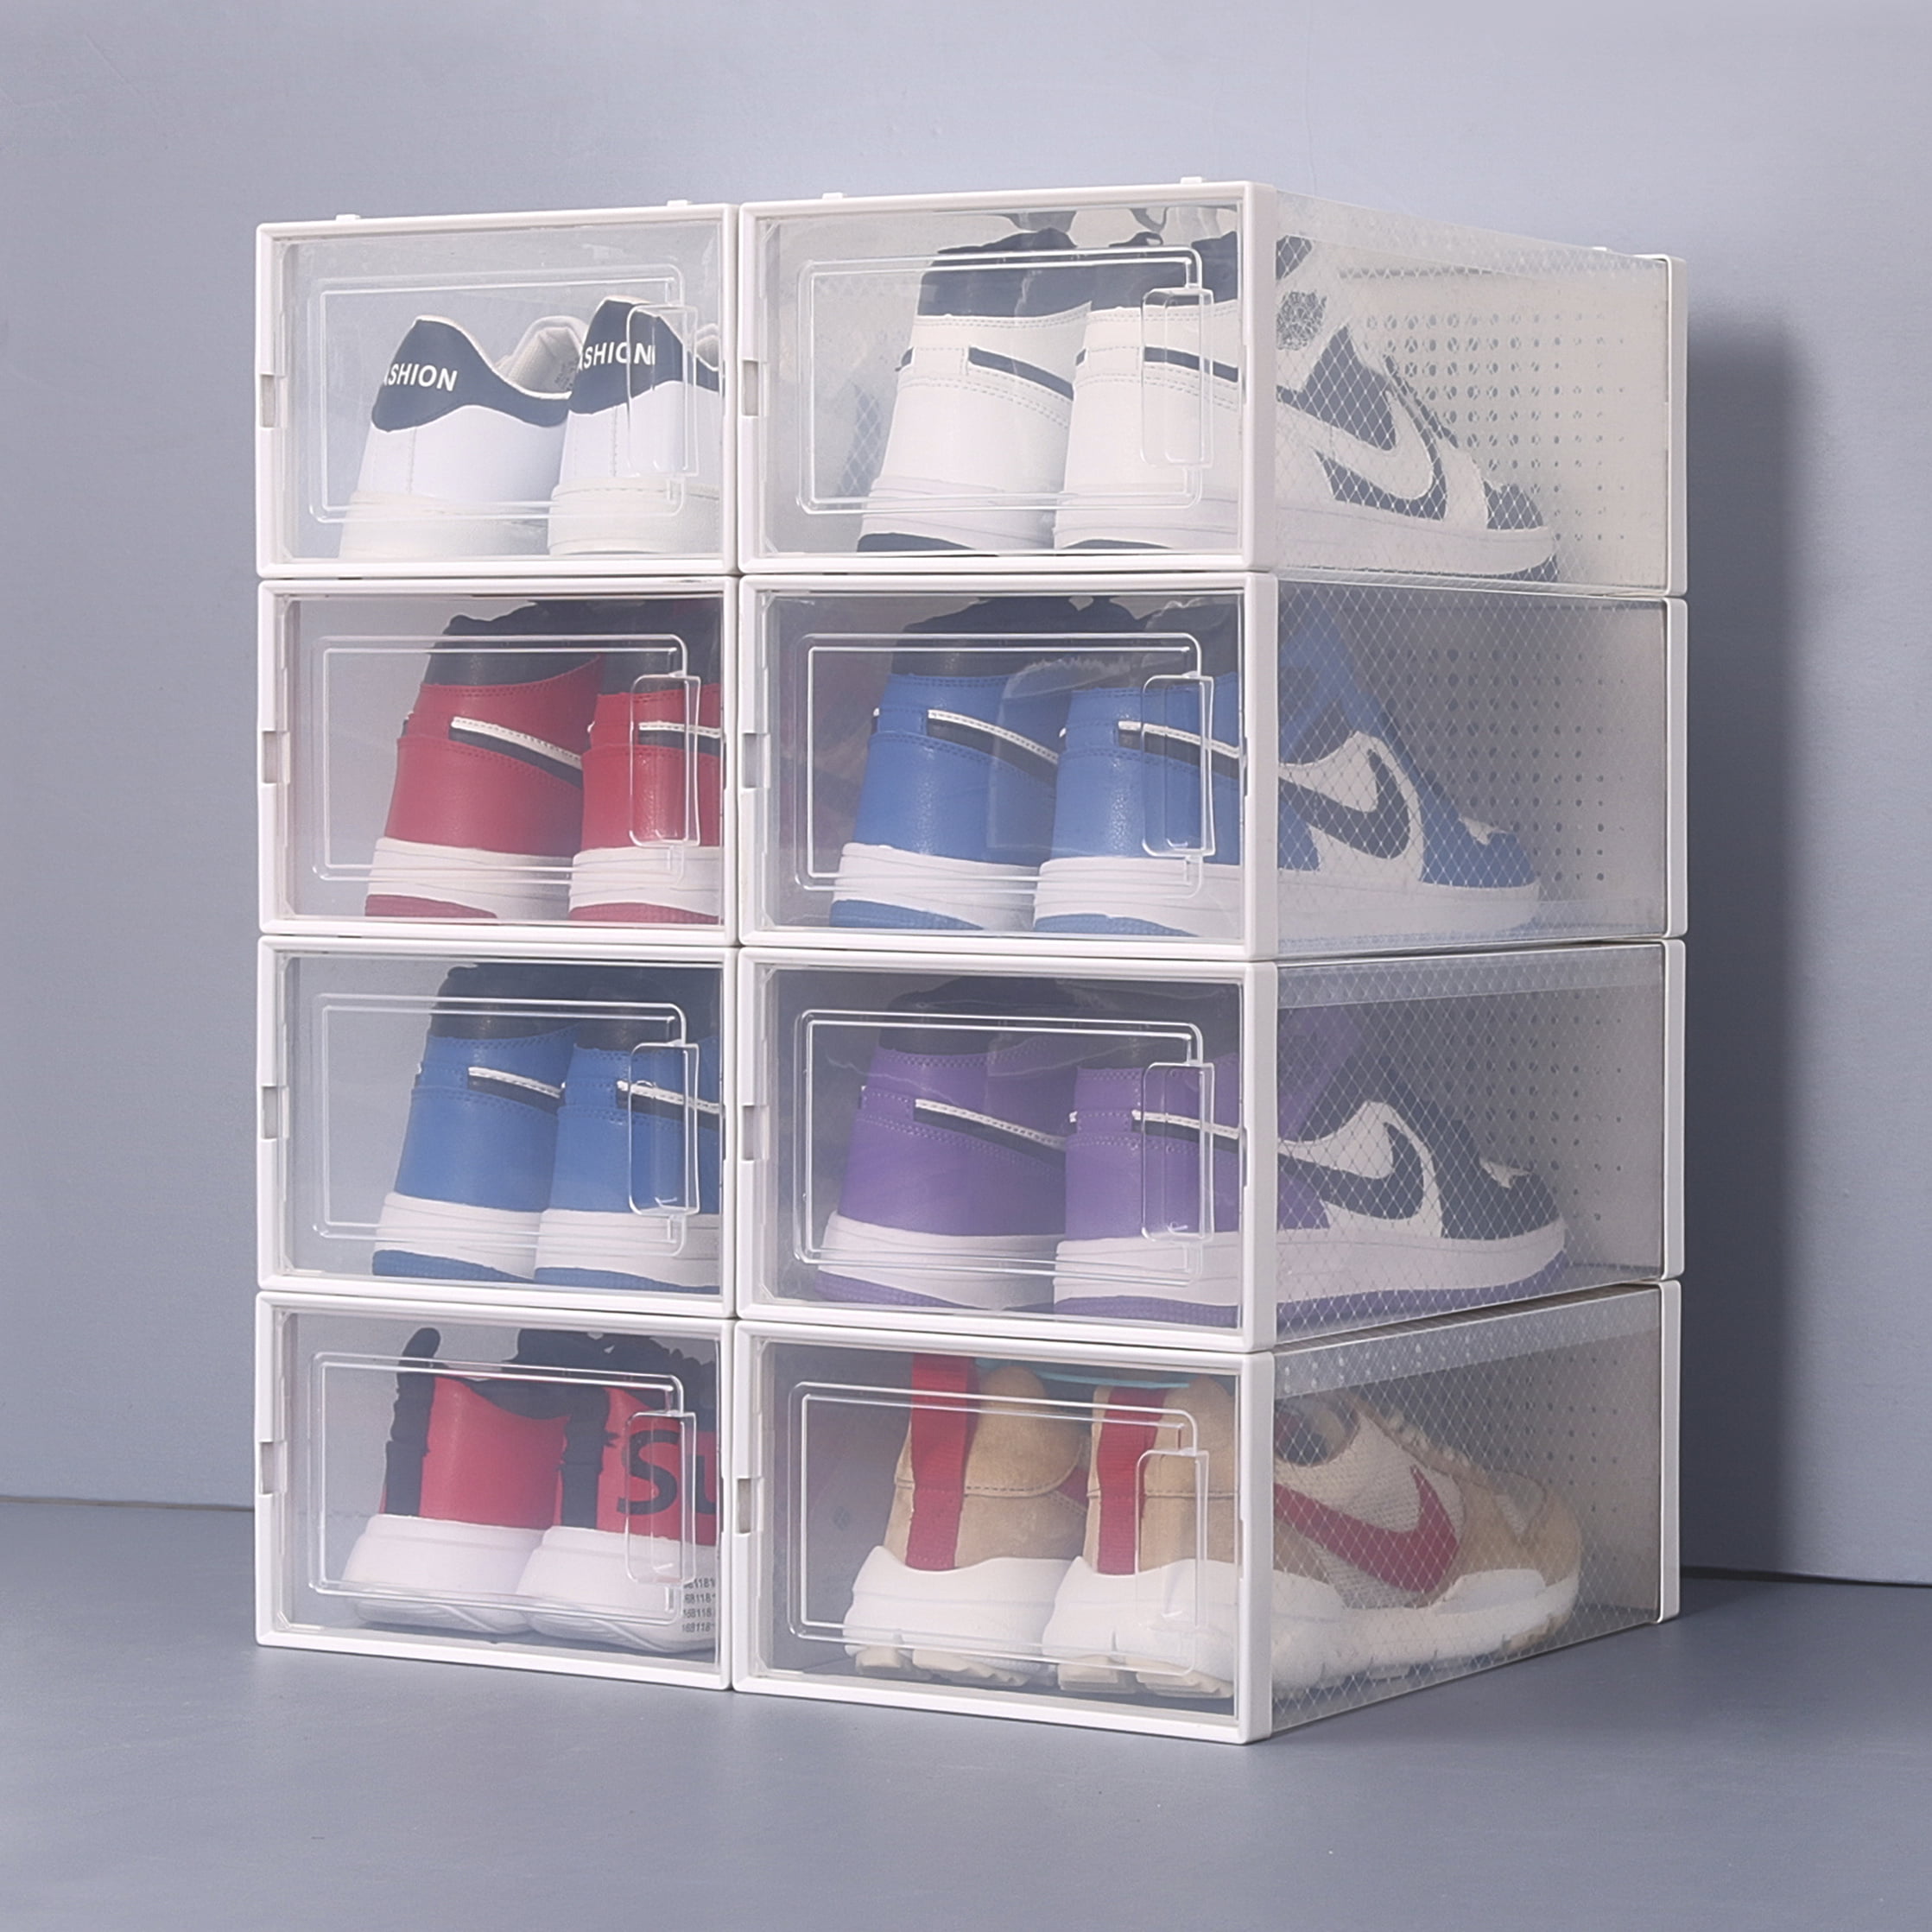 Waytrim Shoe Boxes, Clear Plastic Shoe Boxes with Lids Stackable Shoe Storage for Boots Shoe Organizer for Closet Shoe Container, Wht